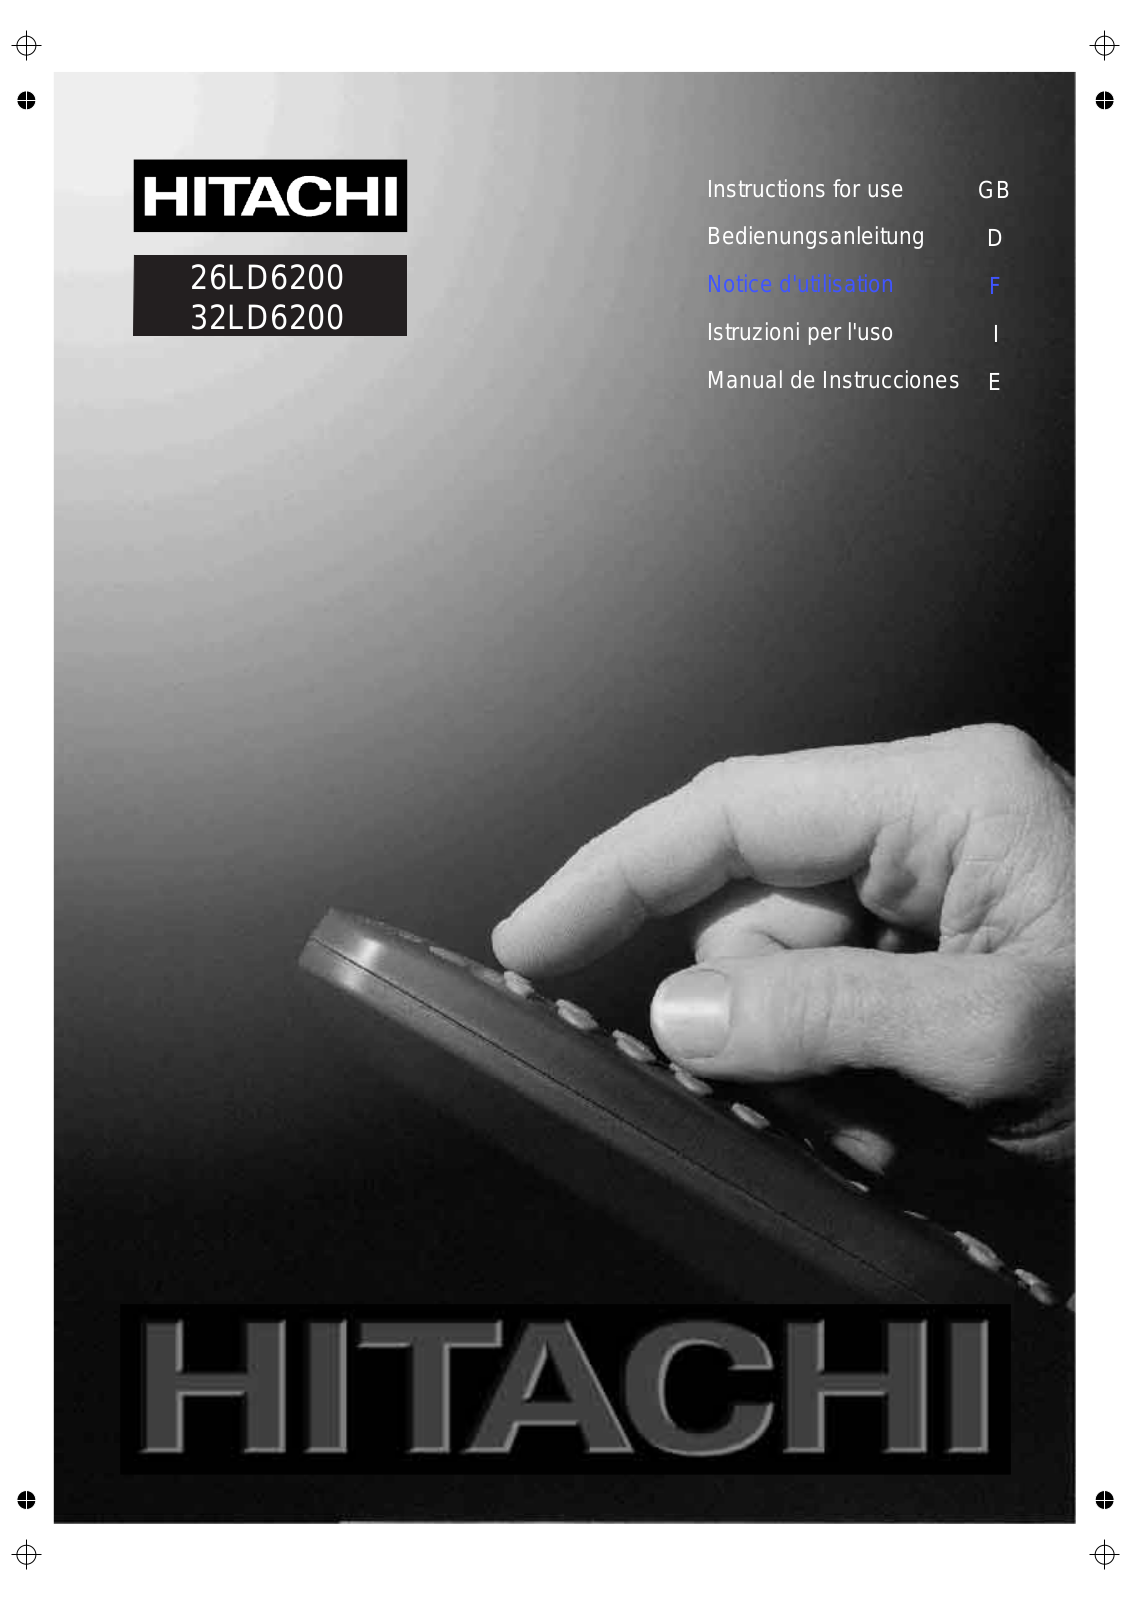 HITACHI 26LD6200IT, 26LD6200, 32LD6200 User Manual